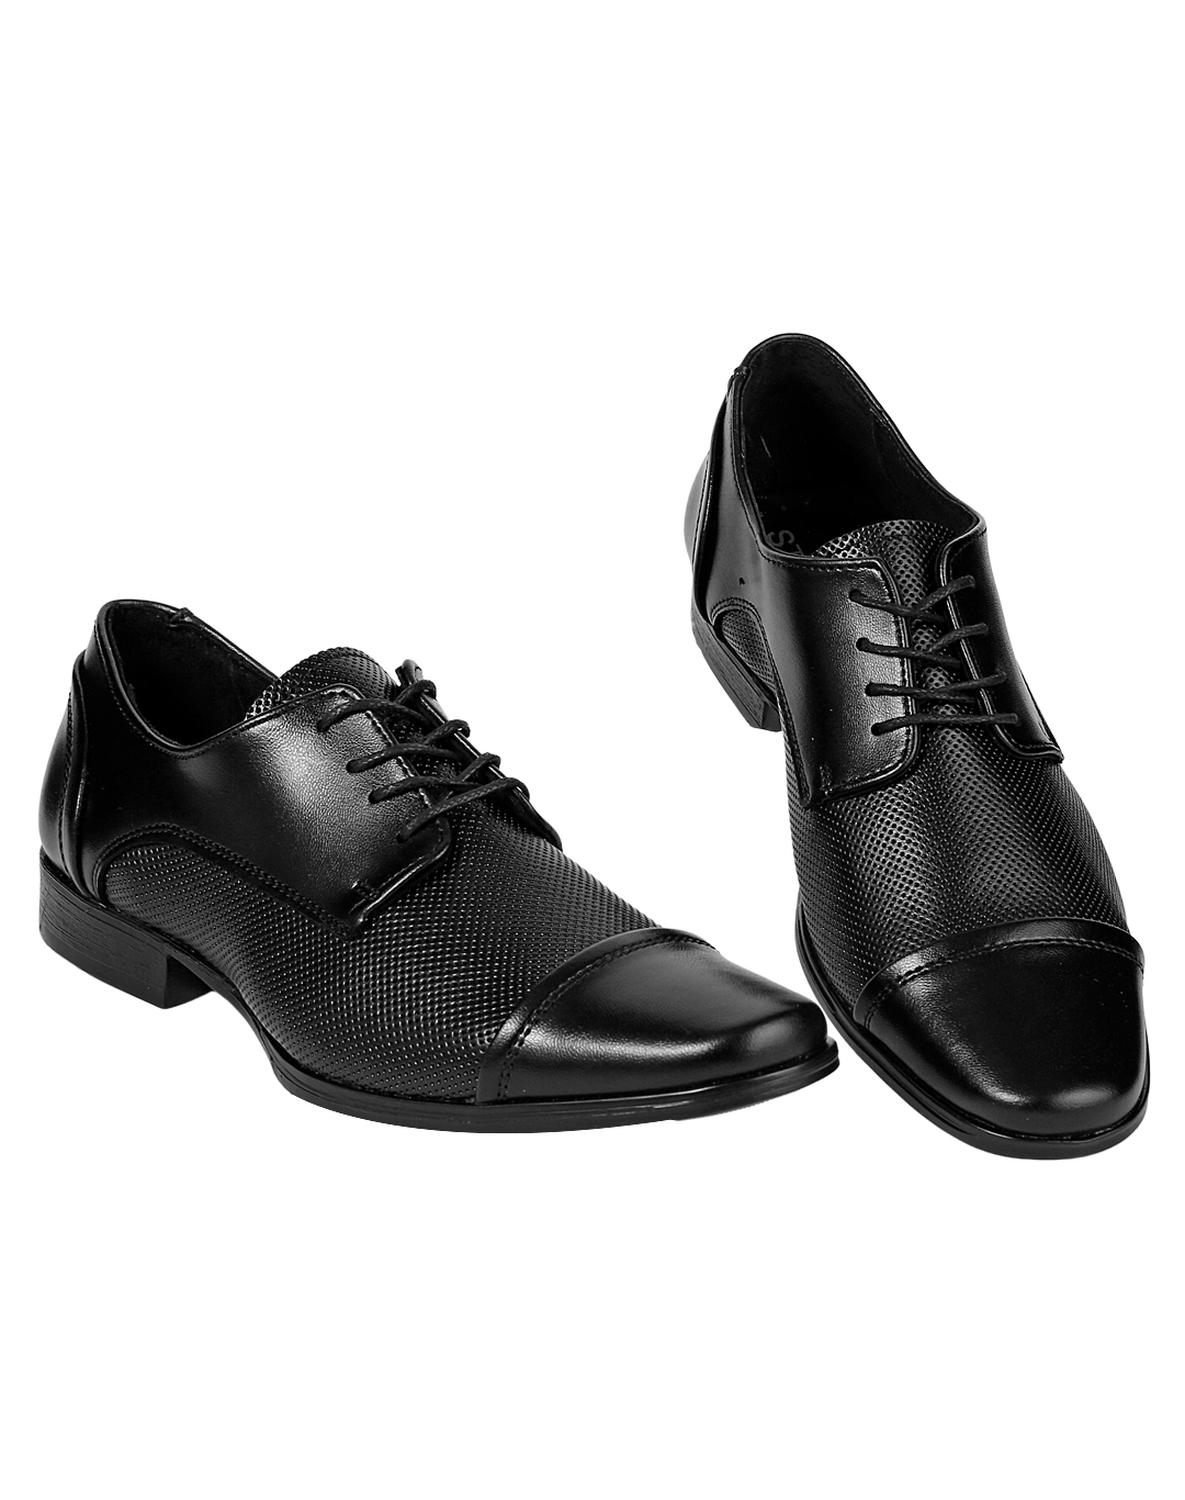 Zapato Vestir Hombre Negro Tacto Piel Stfashion 15103702